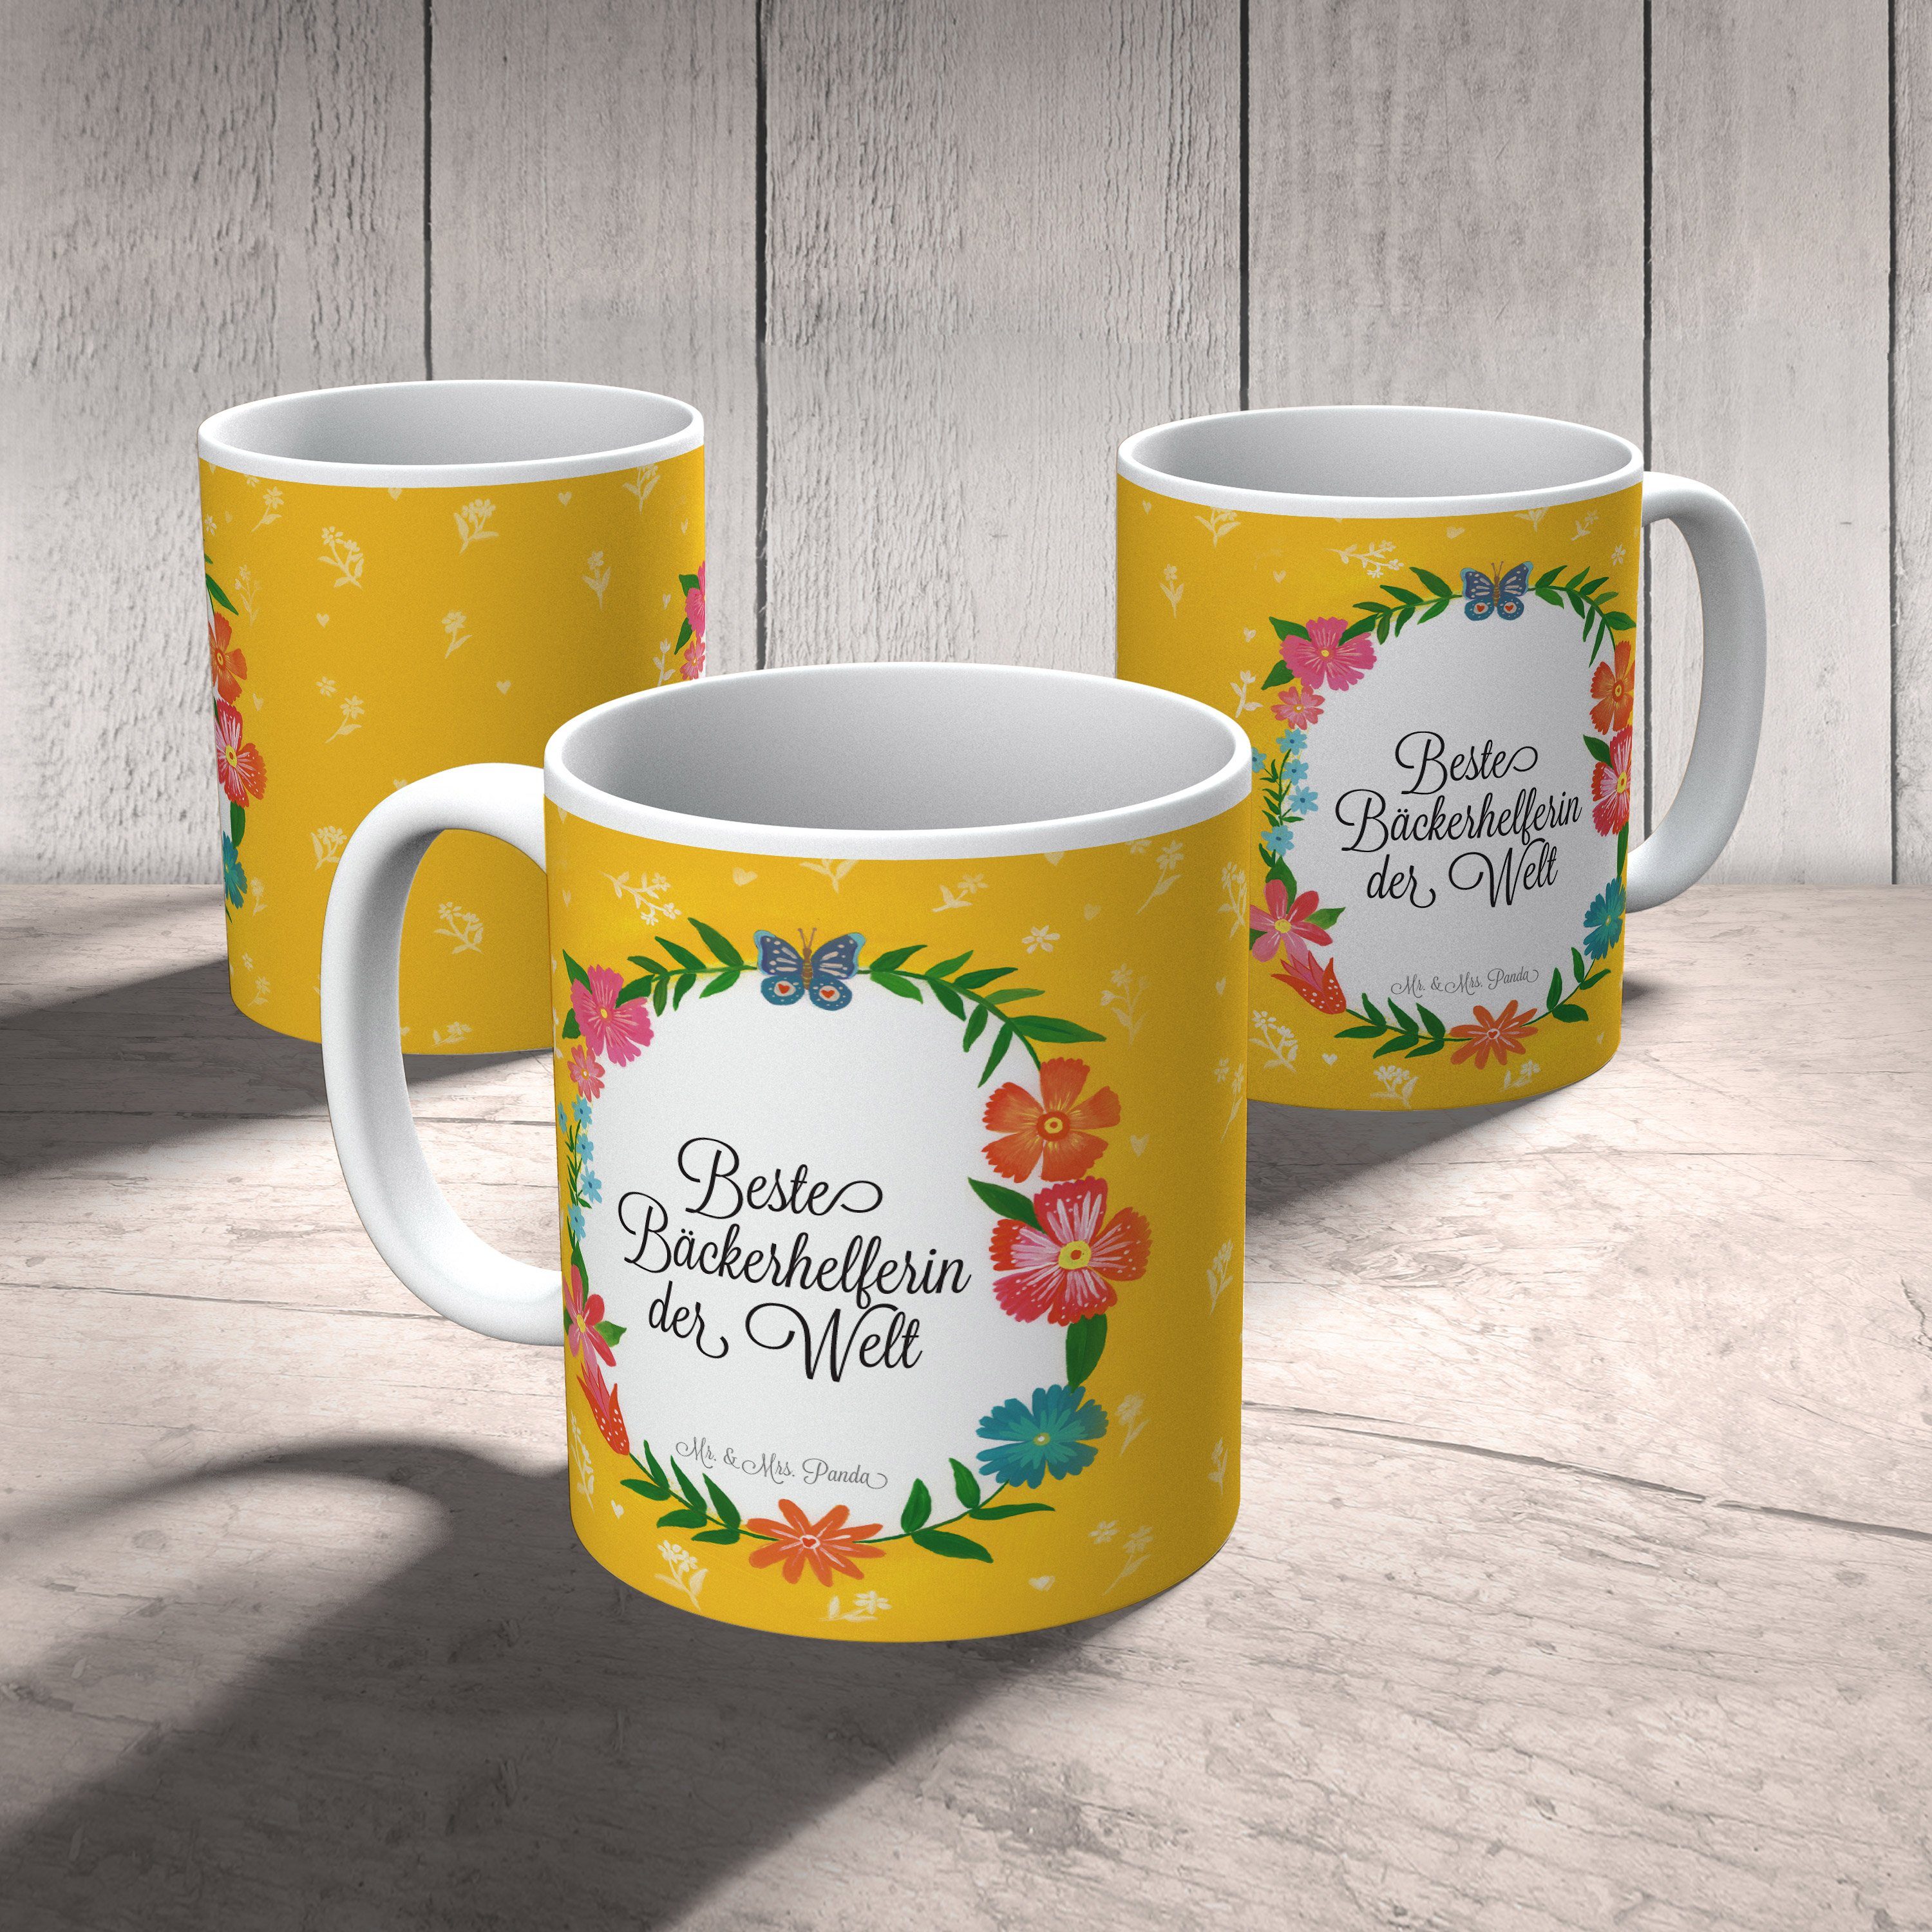 Mr. & Mrs. Panda Tasse Tasse Kaffeetasse, Bäckerhelferin Geschenk, Ausbildung, - Ber, Keramik Motive